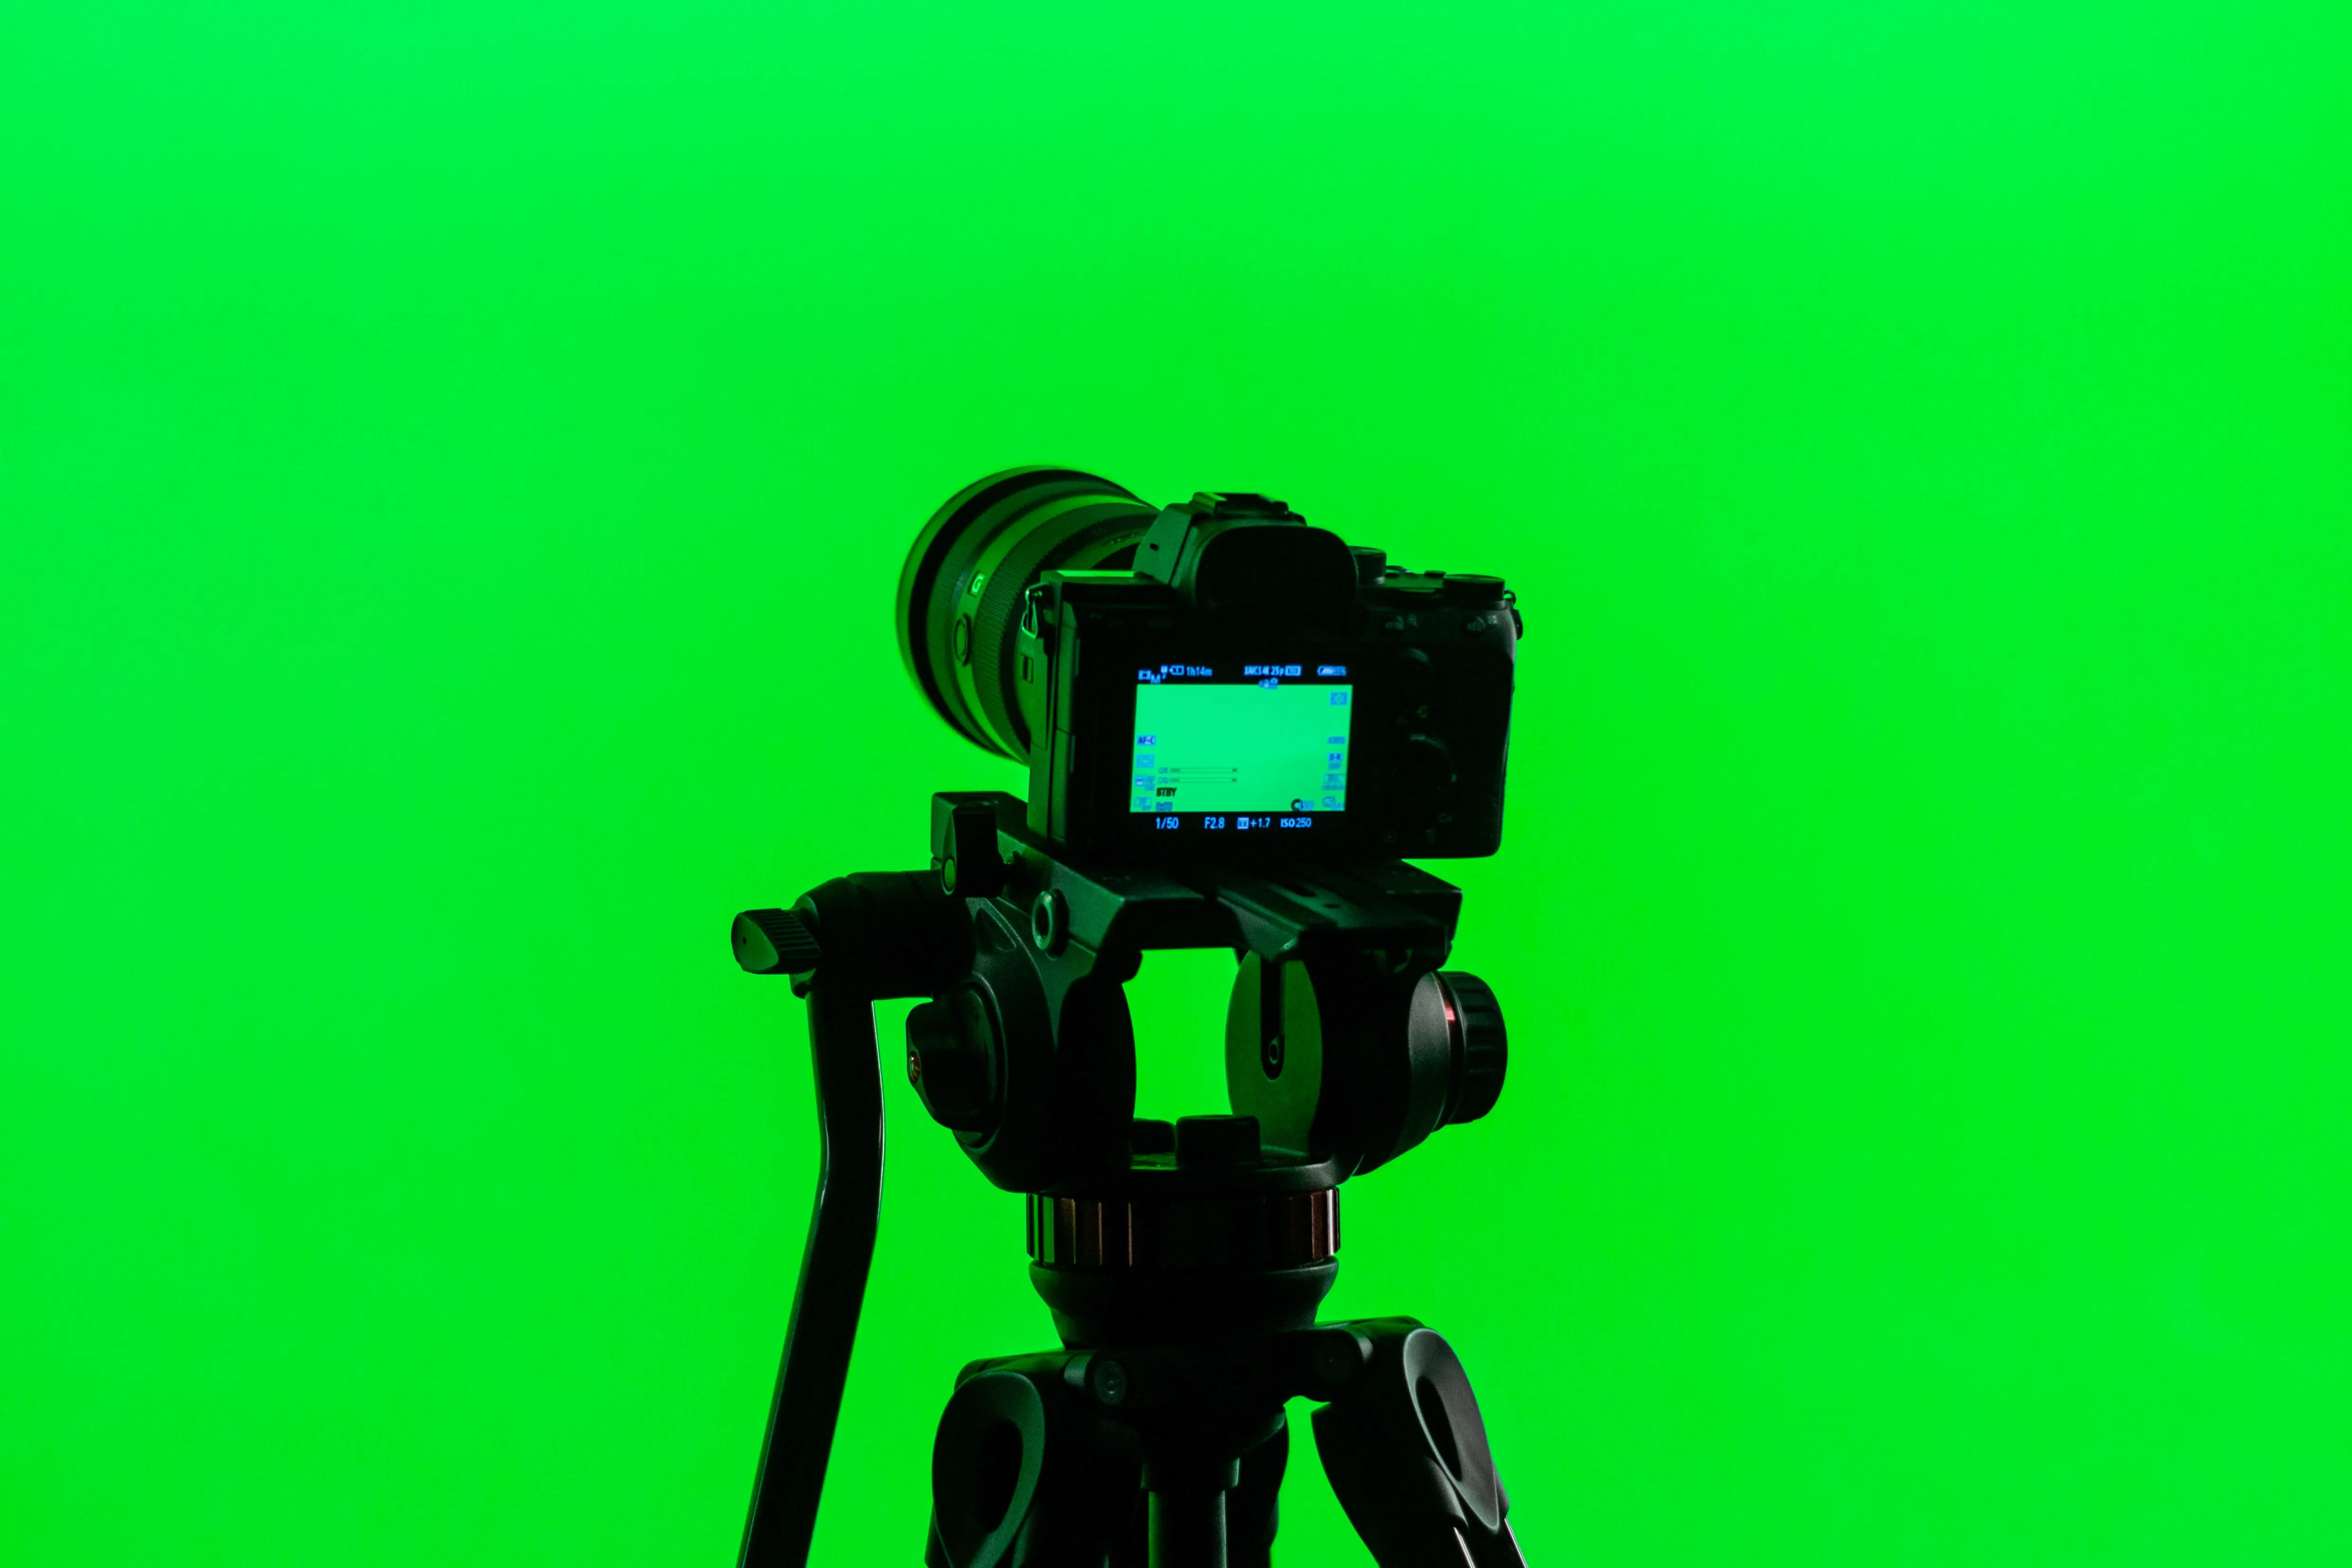 Камера телефона зеленая. Видеокамера хромакей. Фотоаппарат на зеленом фоне. Штатив для хромакея. Видеокамера на зеленом фоне.